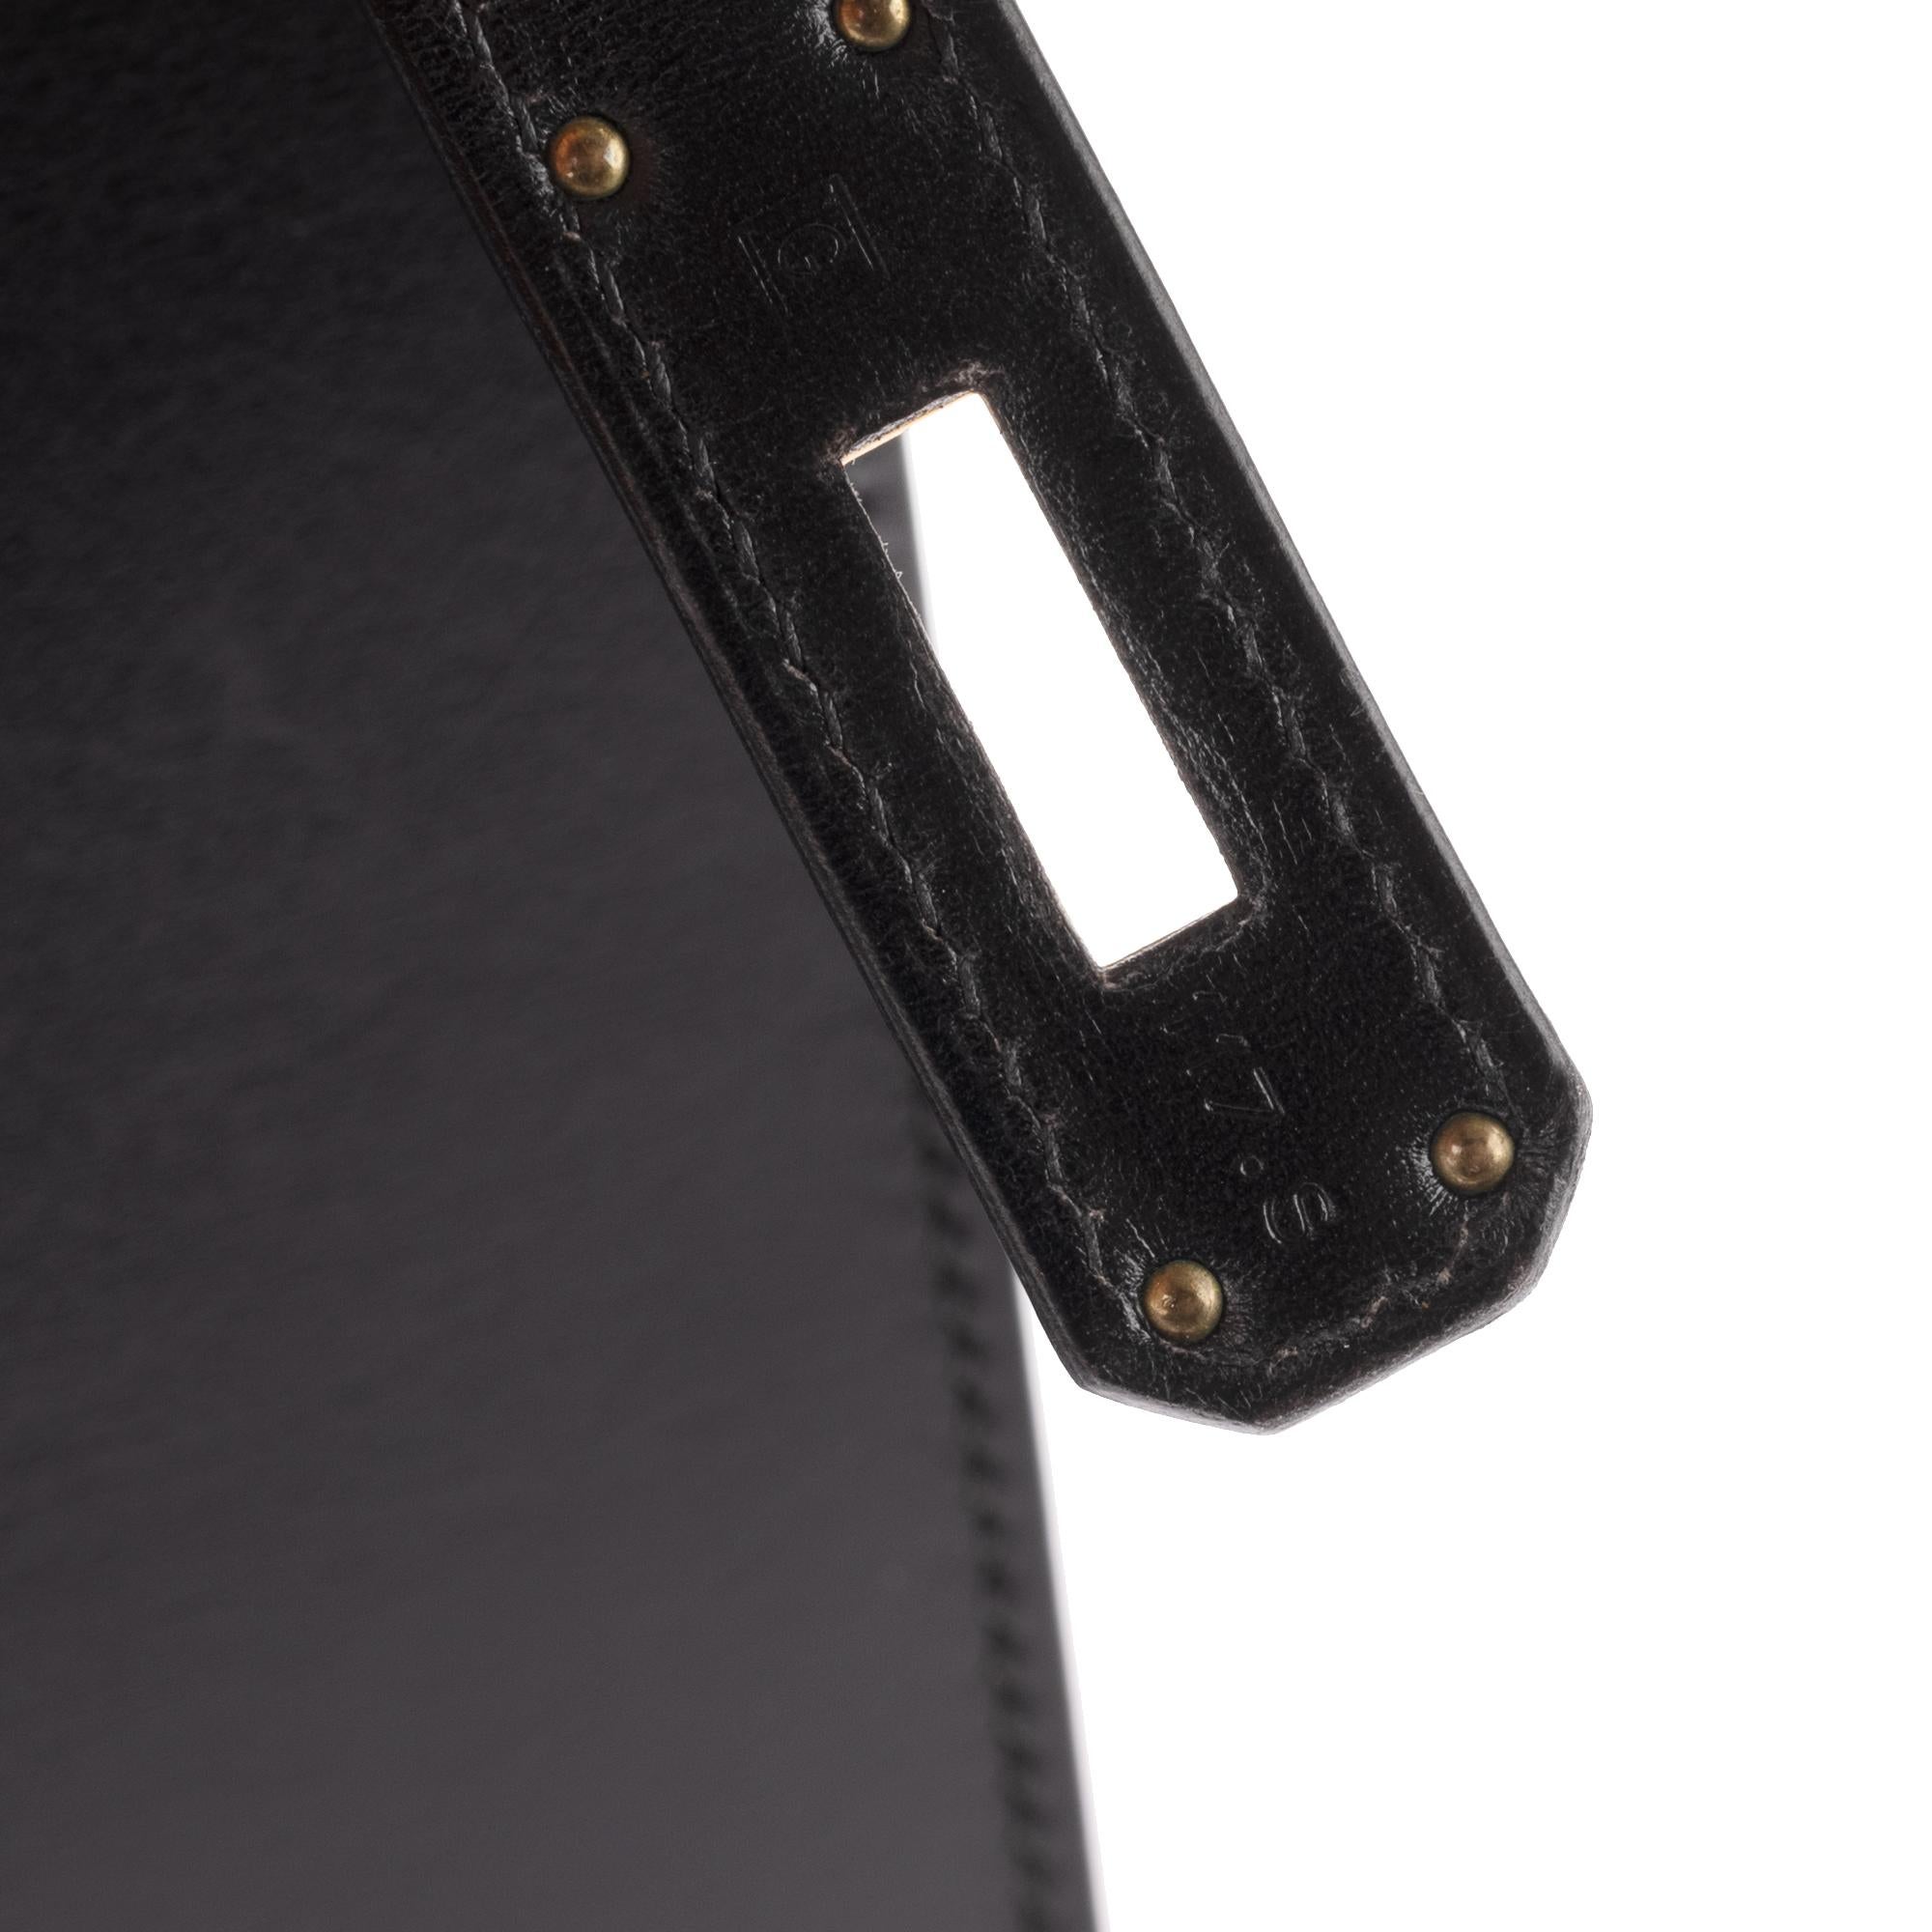 Very limited Handbag Hermès Kelly sellier 32 with strap in black calfskin, GHW! 1